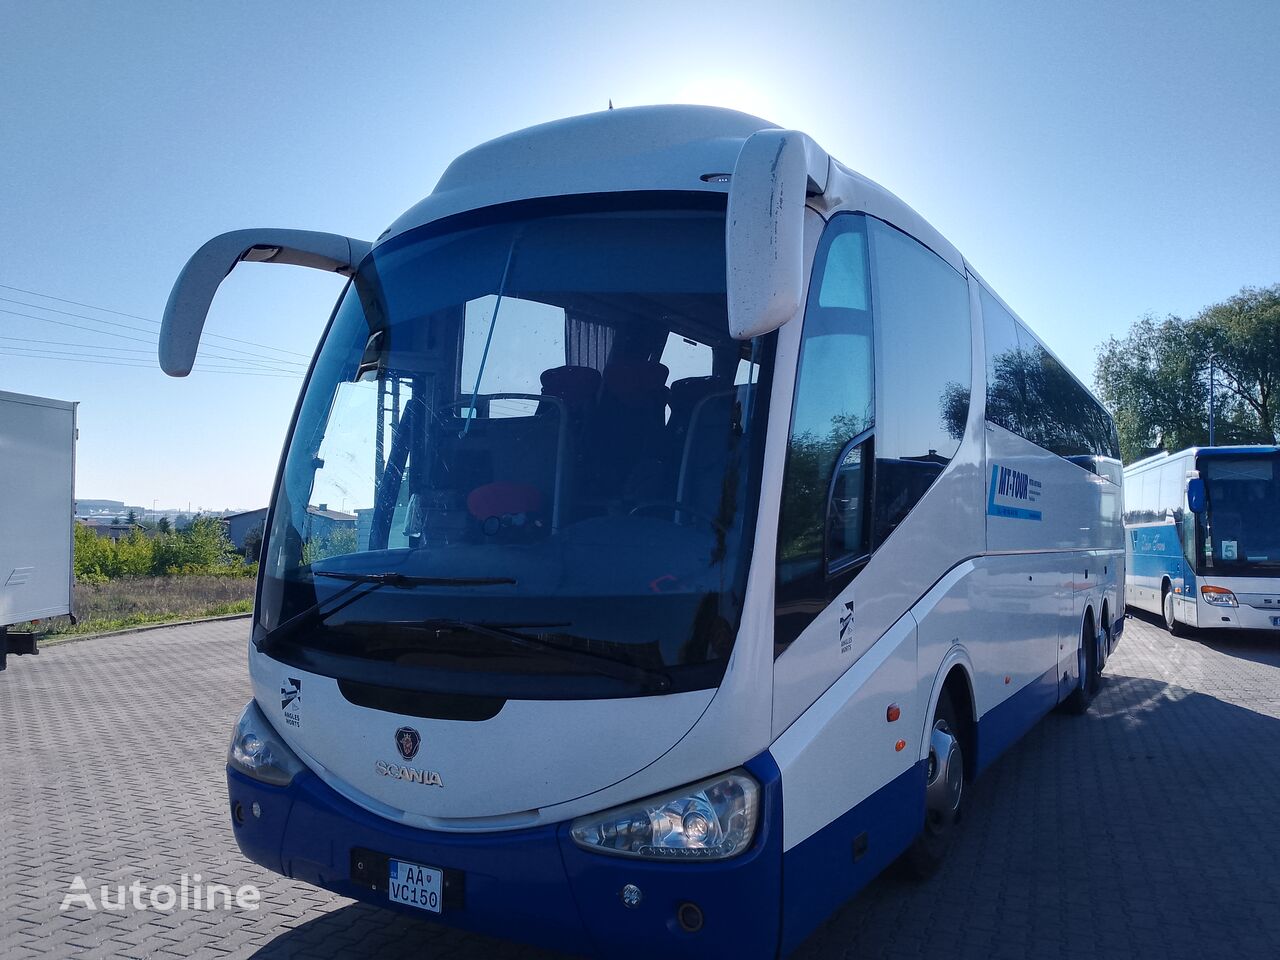 Scania Irizar coach bus